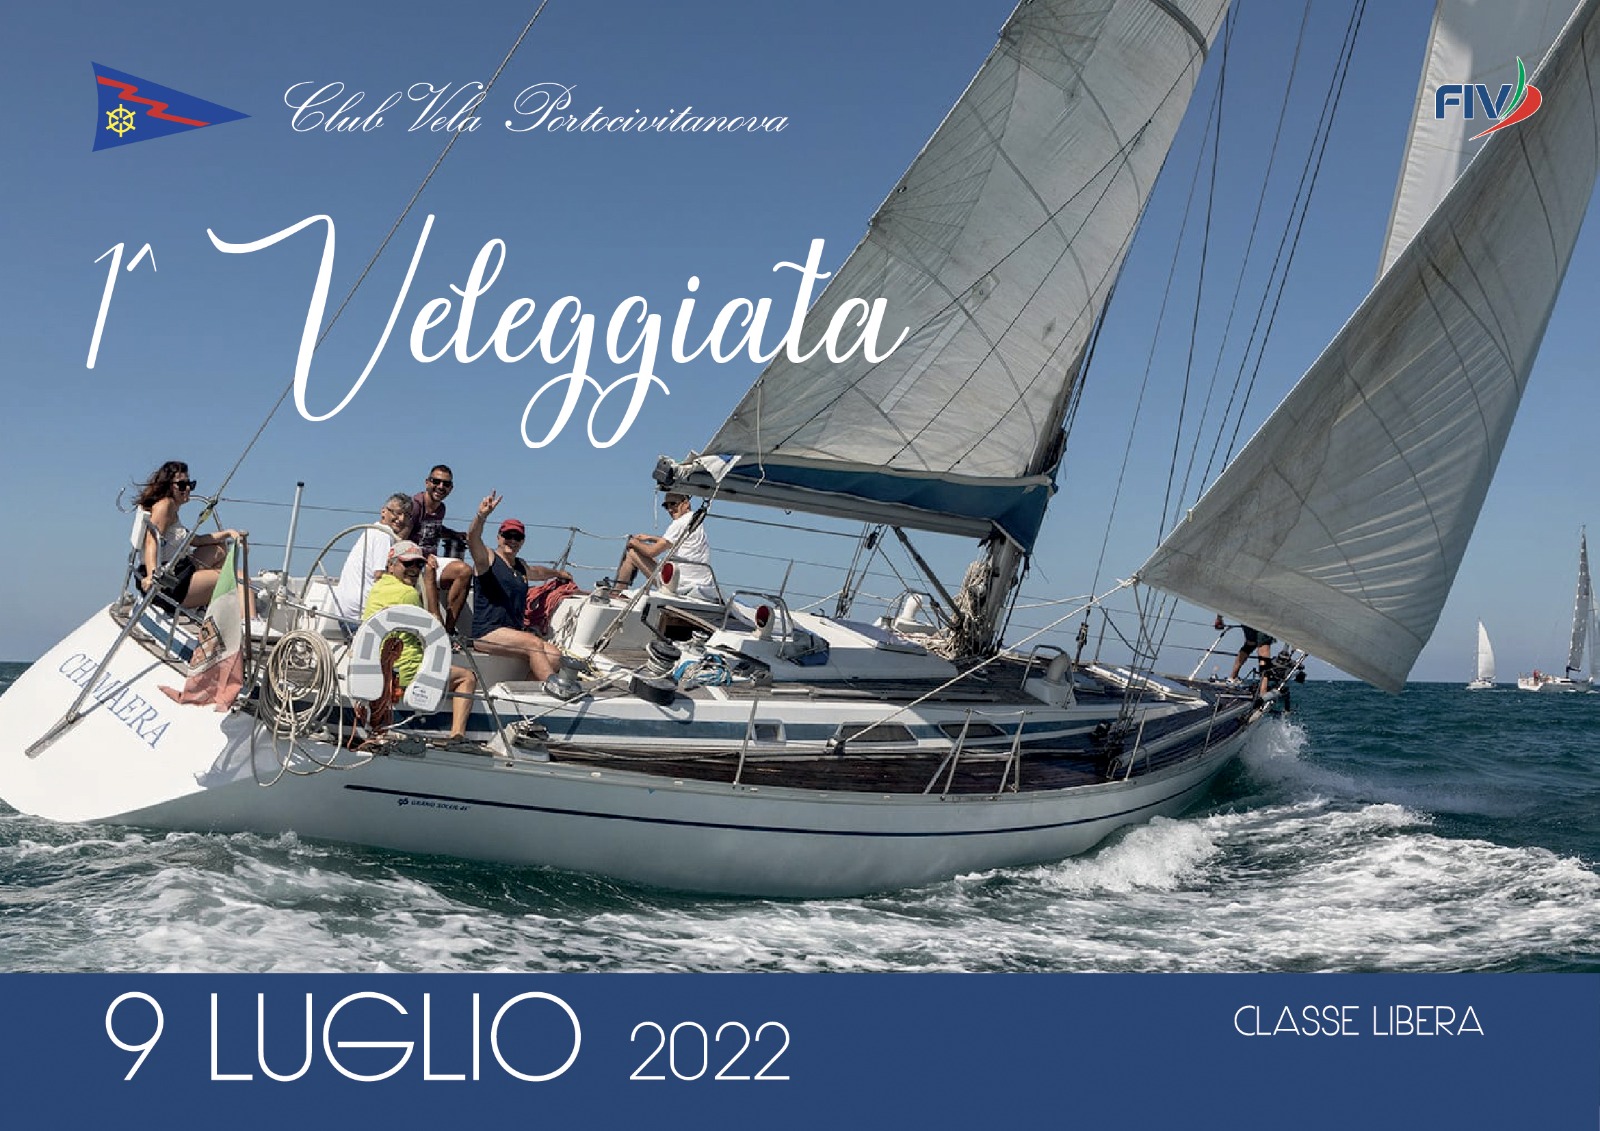 09 luglio 2022 – I^ VELEGGIATA (classe libera)